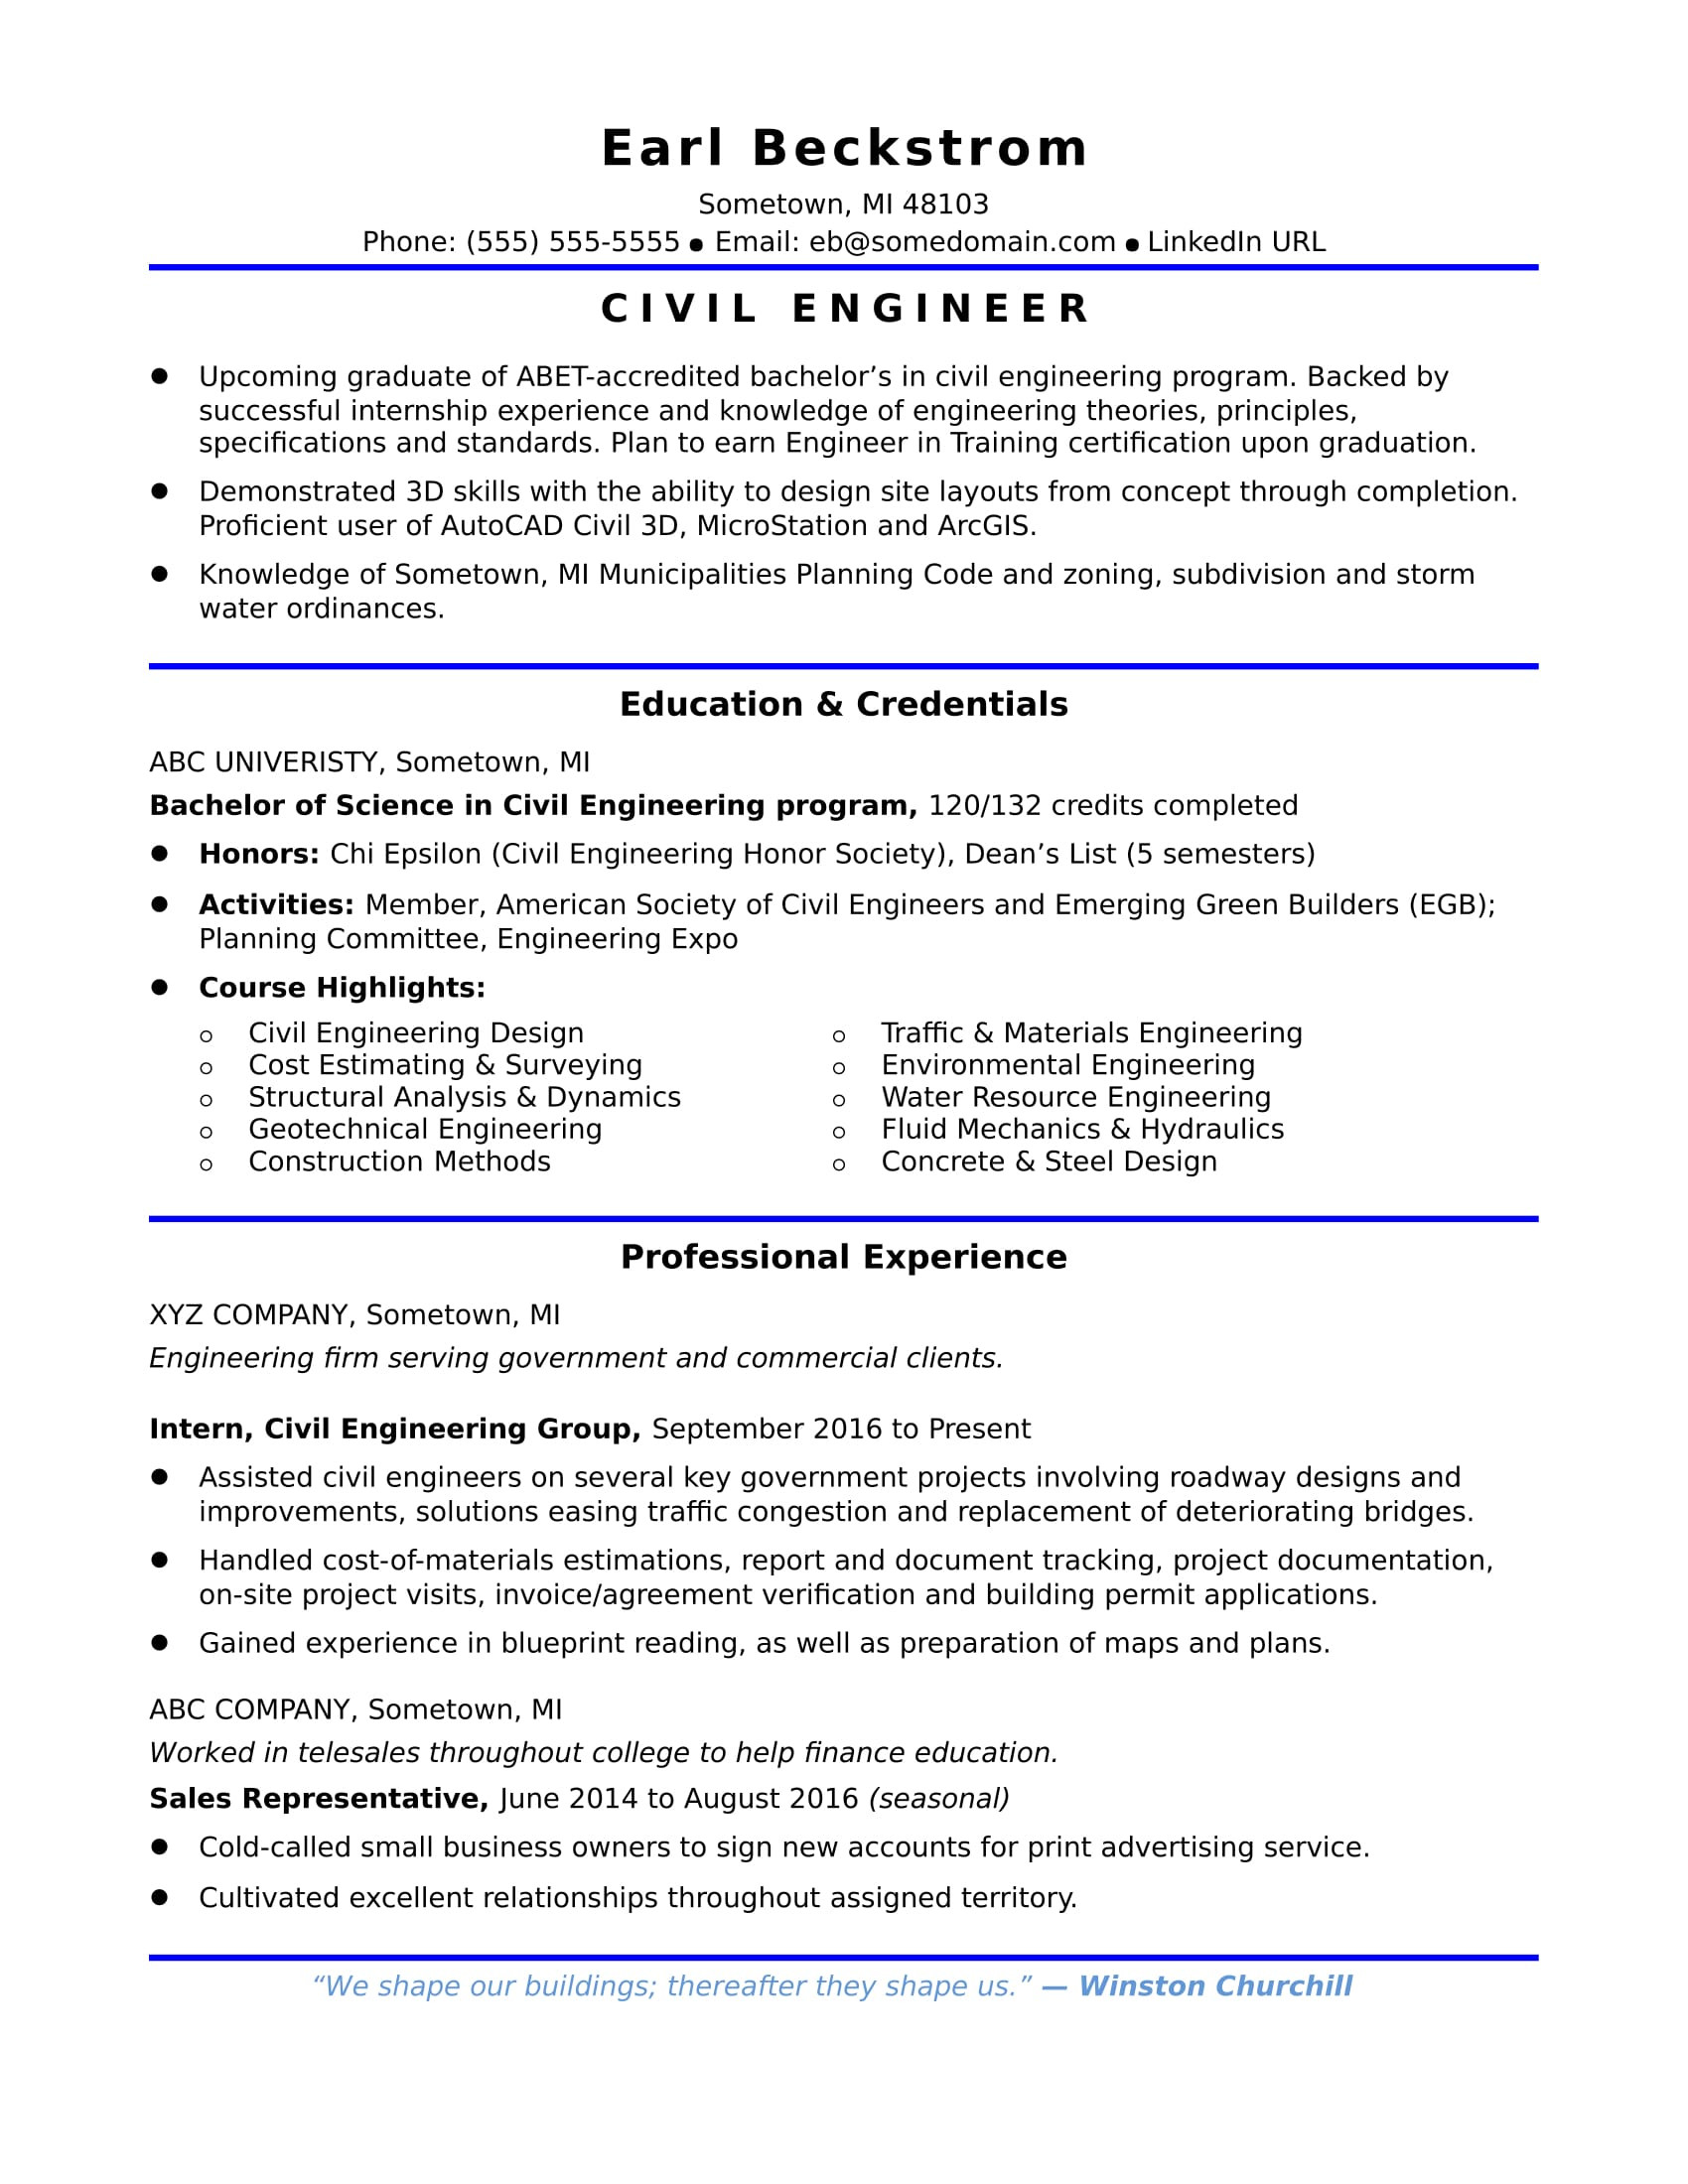 Sample Resume for Civil Engineer Internship Sample Resume for An Entry-level Civil Engineer Monster.com